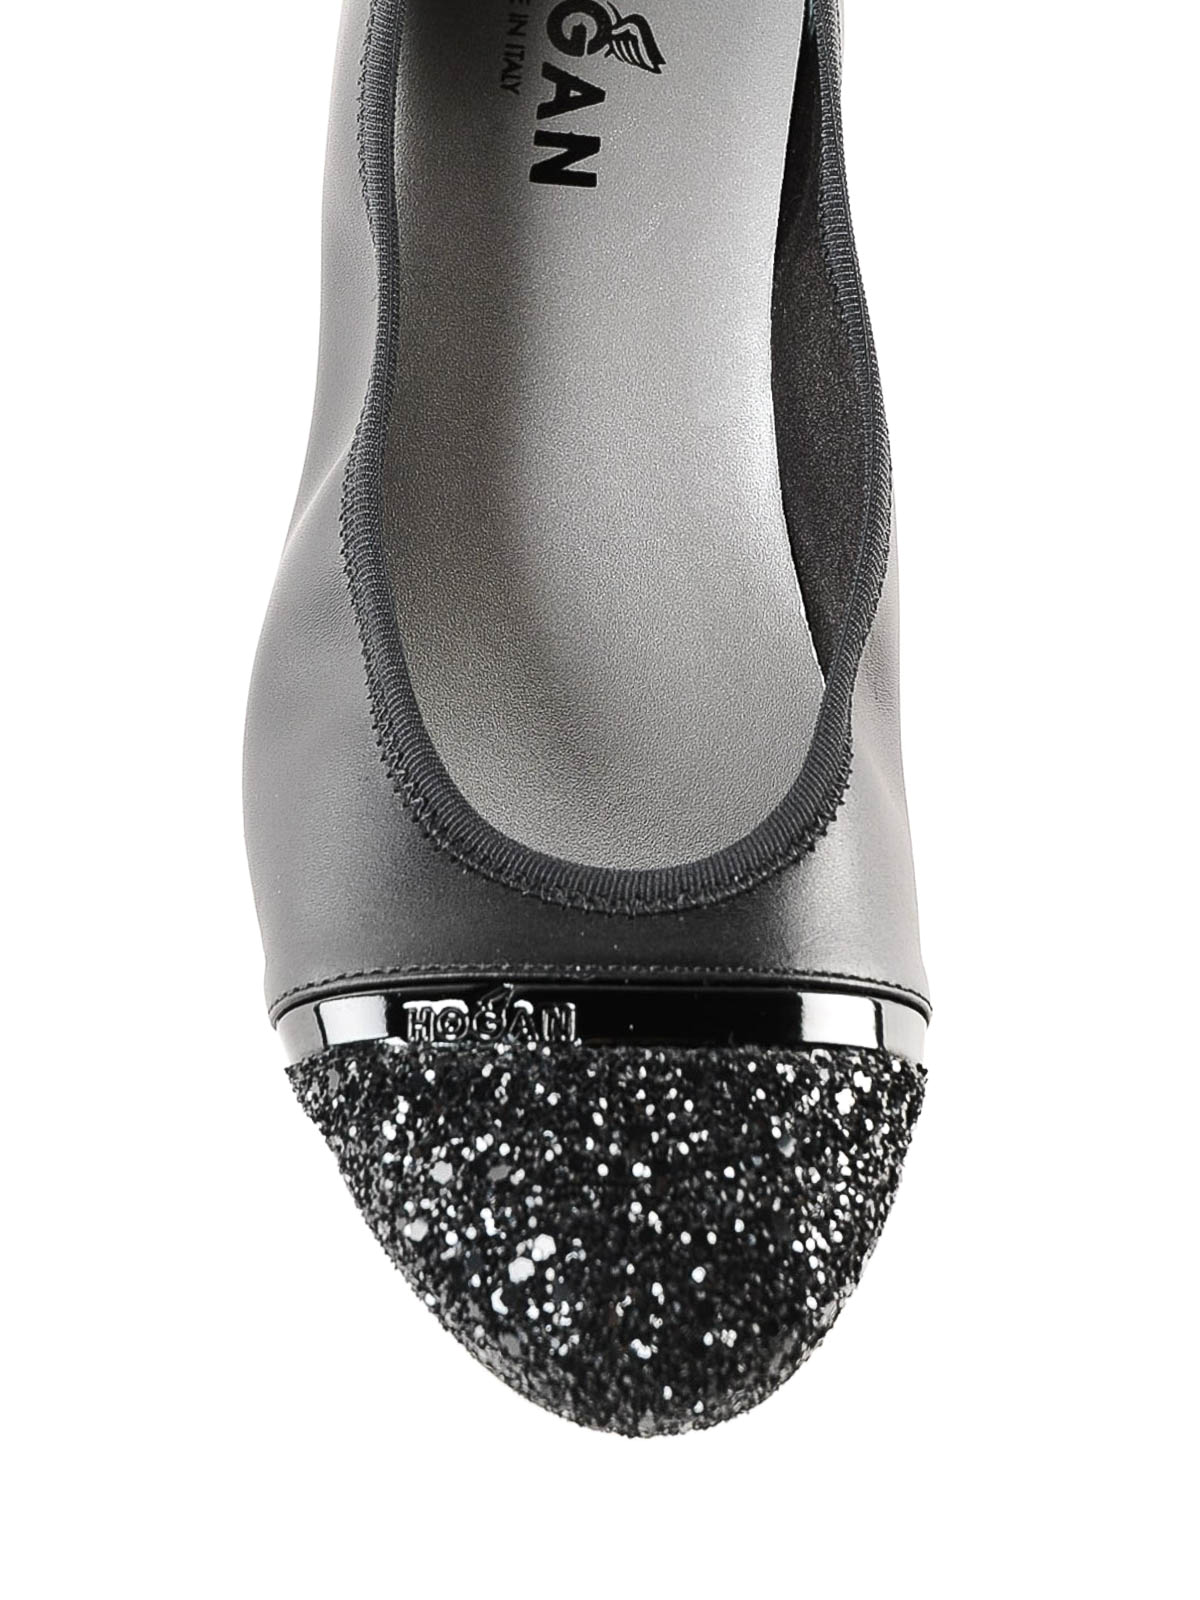 black glitter flat shoes